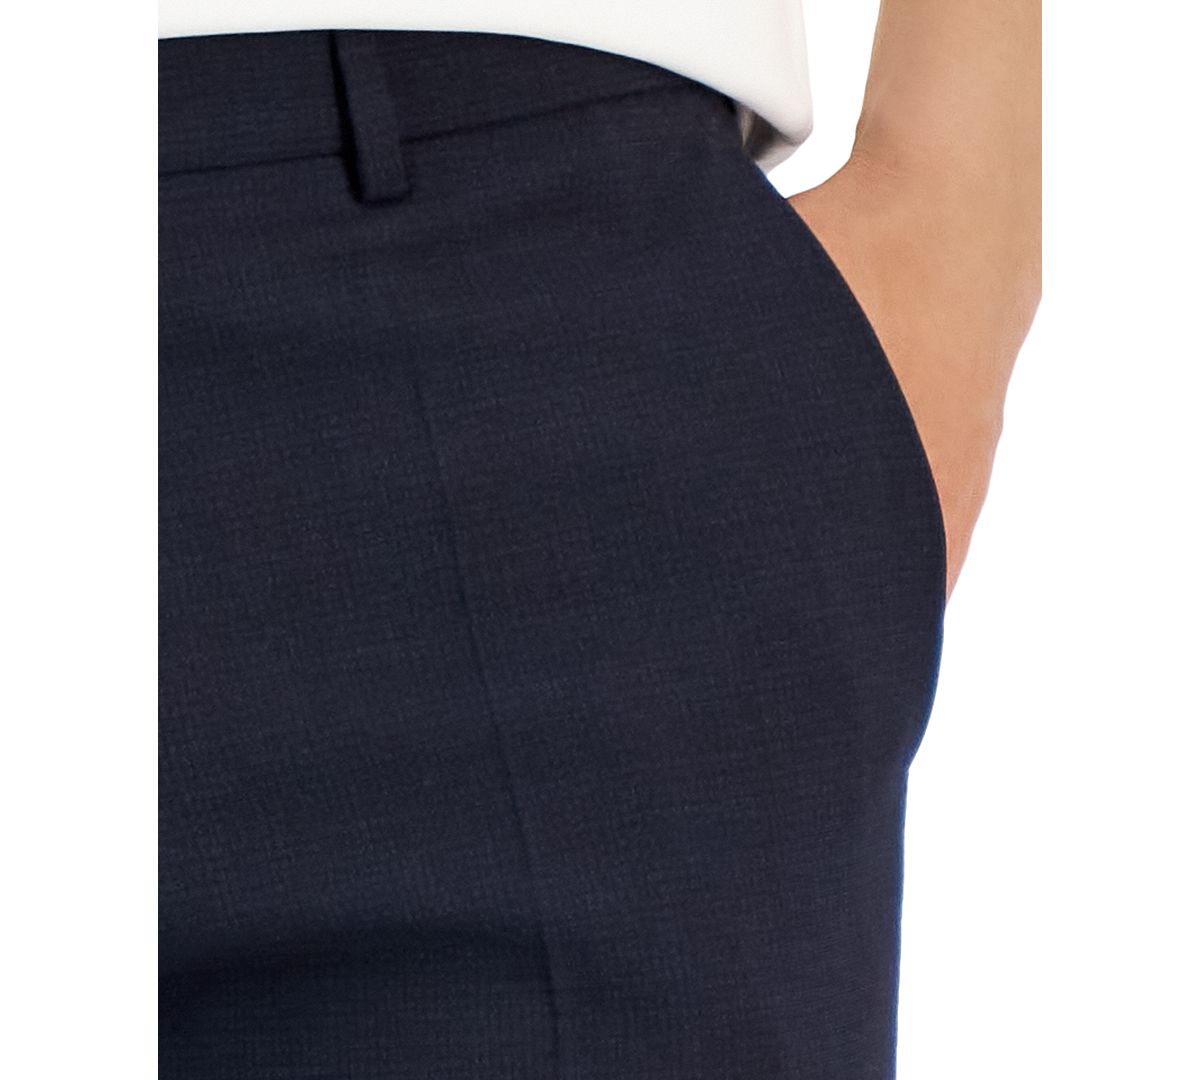 Hugo Boss Slim-fit Super Flex Stretch Micro-check Suit Pants Navy Micro